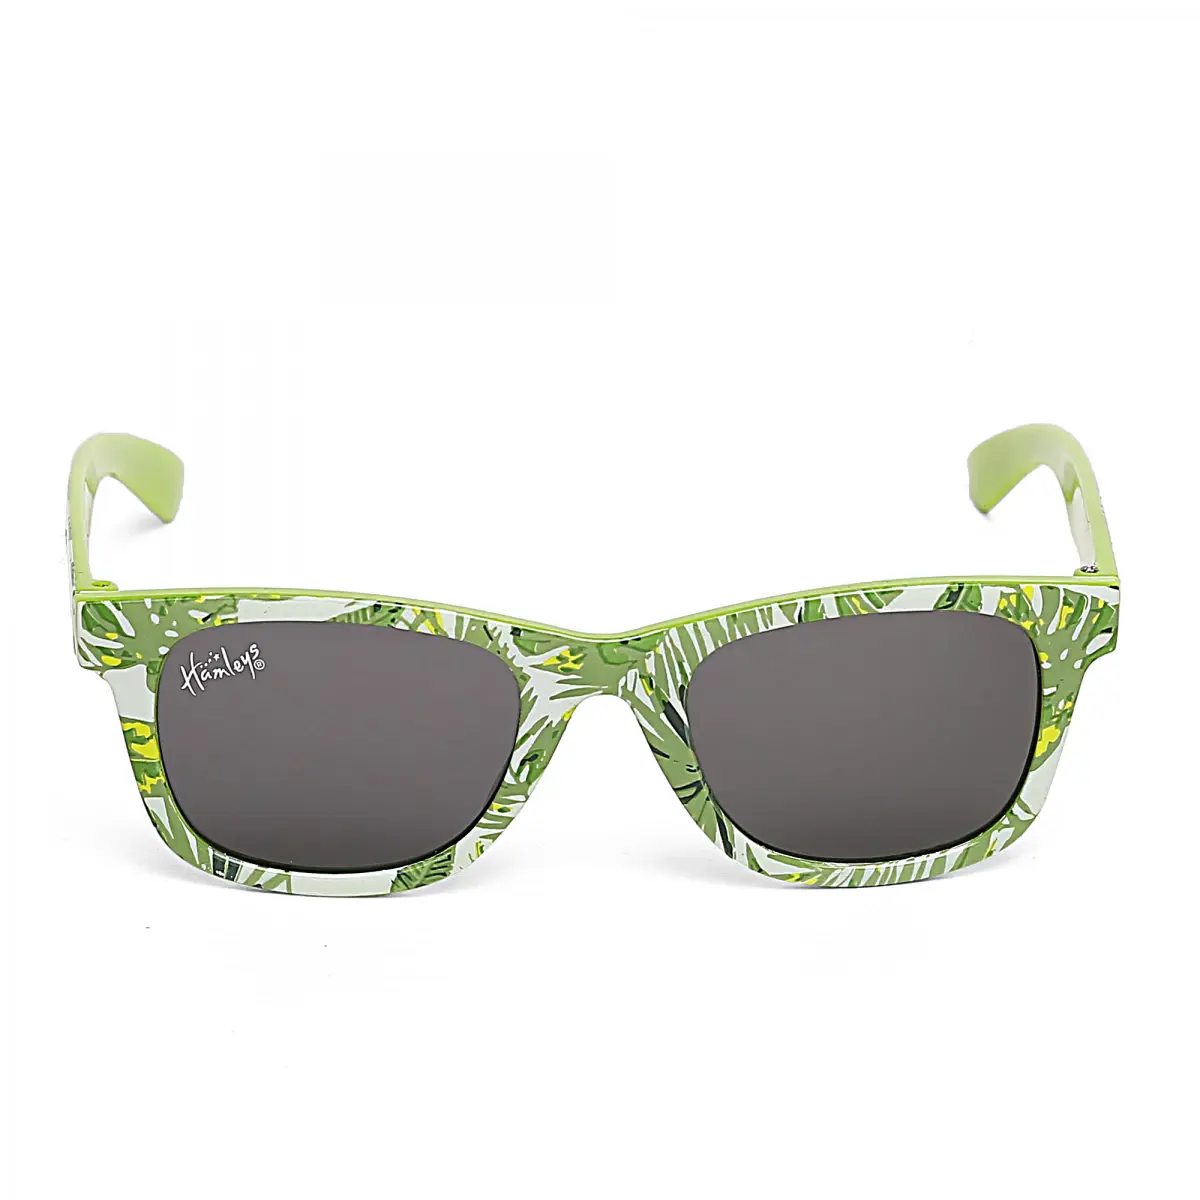 Wholesale Designer Sunglasses Canada|Cheap Wholesale Sunglasses|Bulk